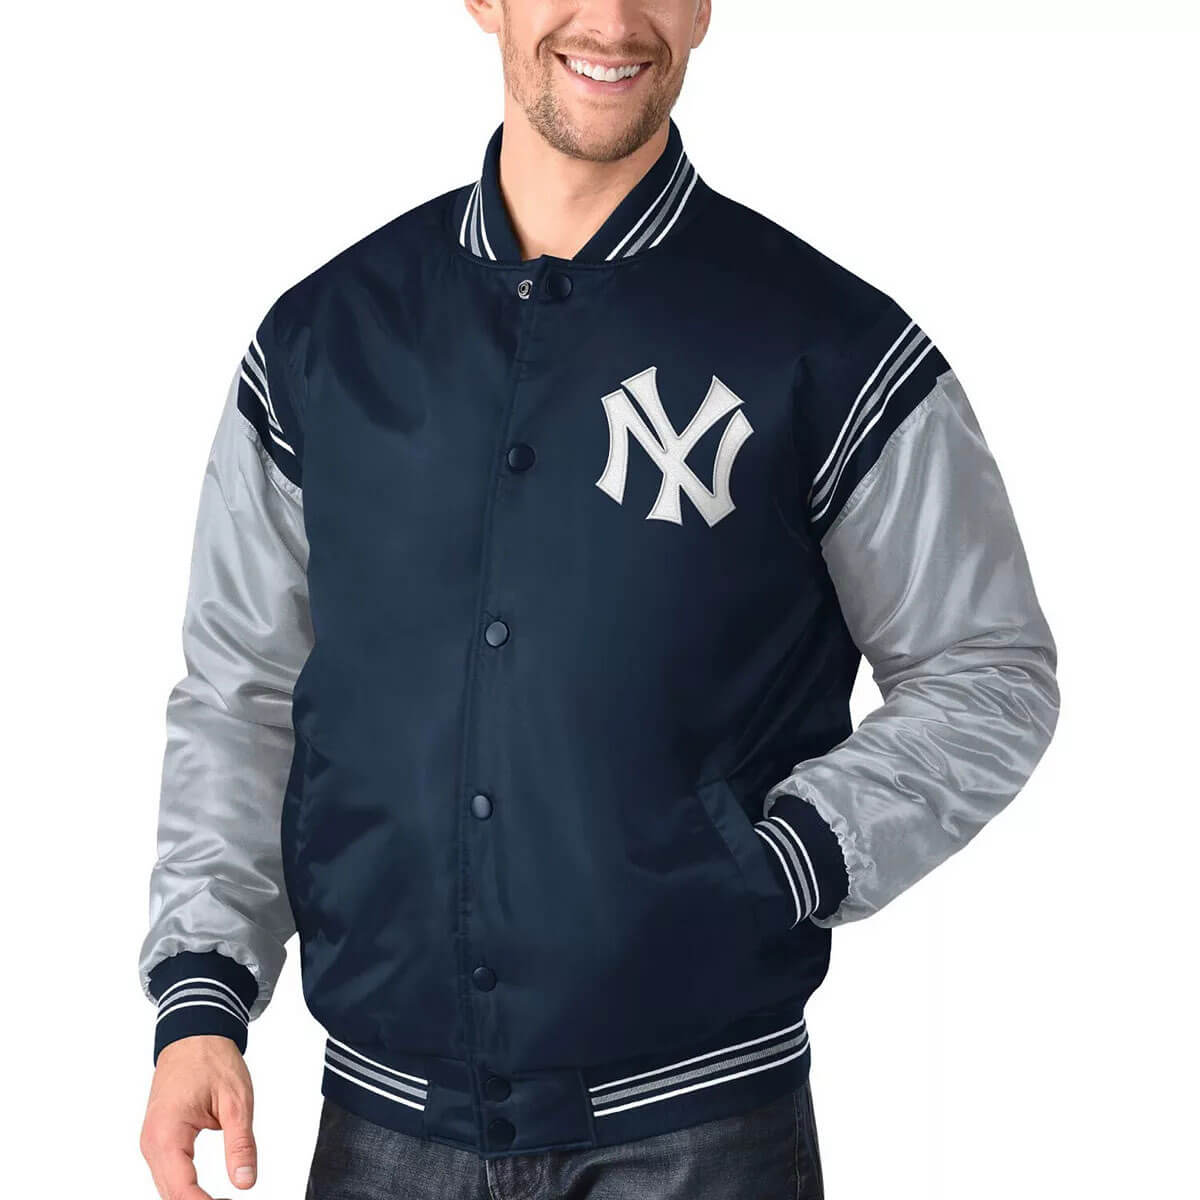 Maker of Jacket Men Jackets Navy/Gray New York Yankees Varsity Satin